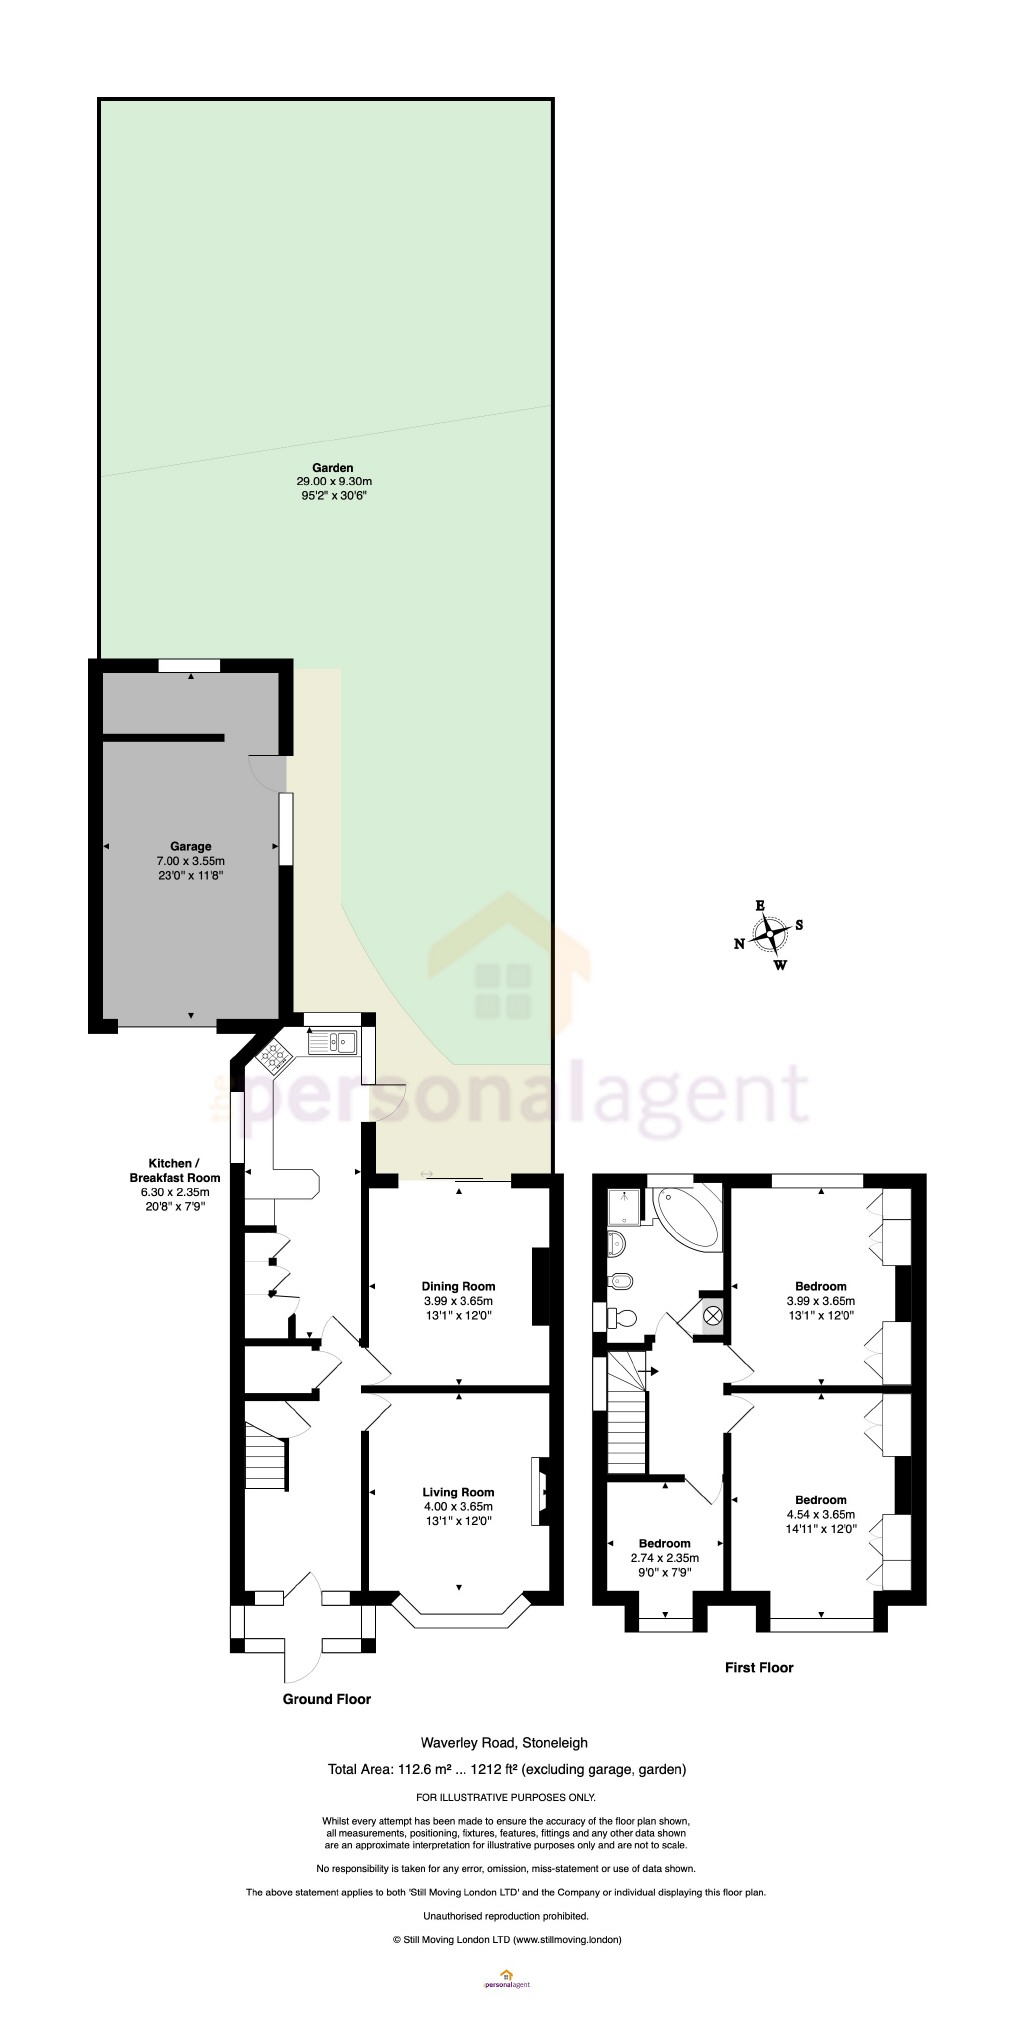 3 Bedrooms Semi-detached house for sale in Waverley Road, Stoneleigh, Surrey KT17